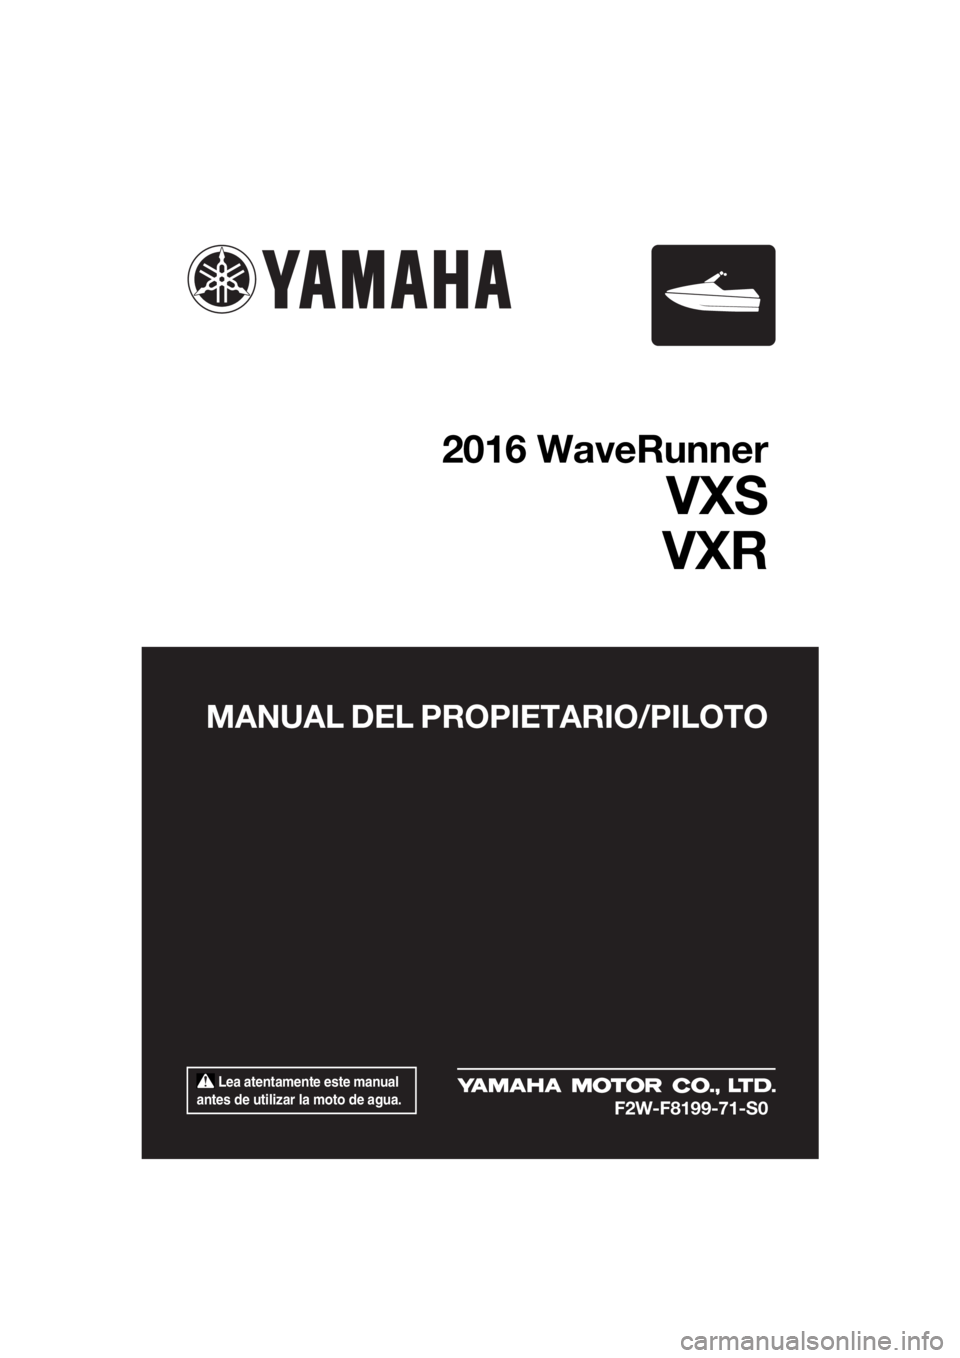 YAMAHA VXR 2016  Manuale de Empleo (in Spanish)  Lea atentamente este manual 
antes de utilizar la moto de agua.
MANUAL DEL PROPIETARIO/PILOTO
2016 WaveRunner
VXS
VXR
F2W-F8199-71-S0
UF2W71S0.book  Page 1  Monday, July 6, 2015  1:44 PM 